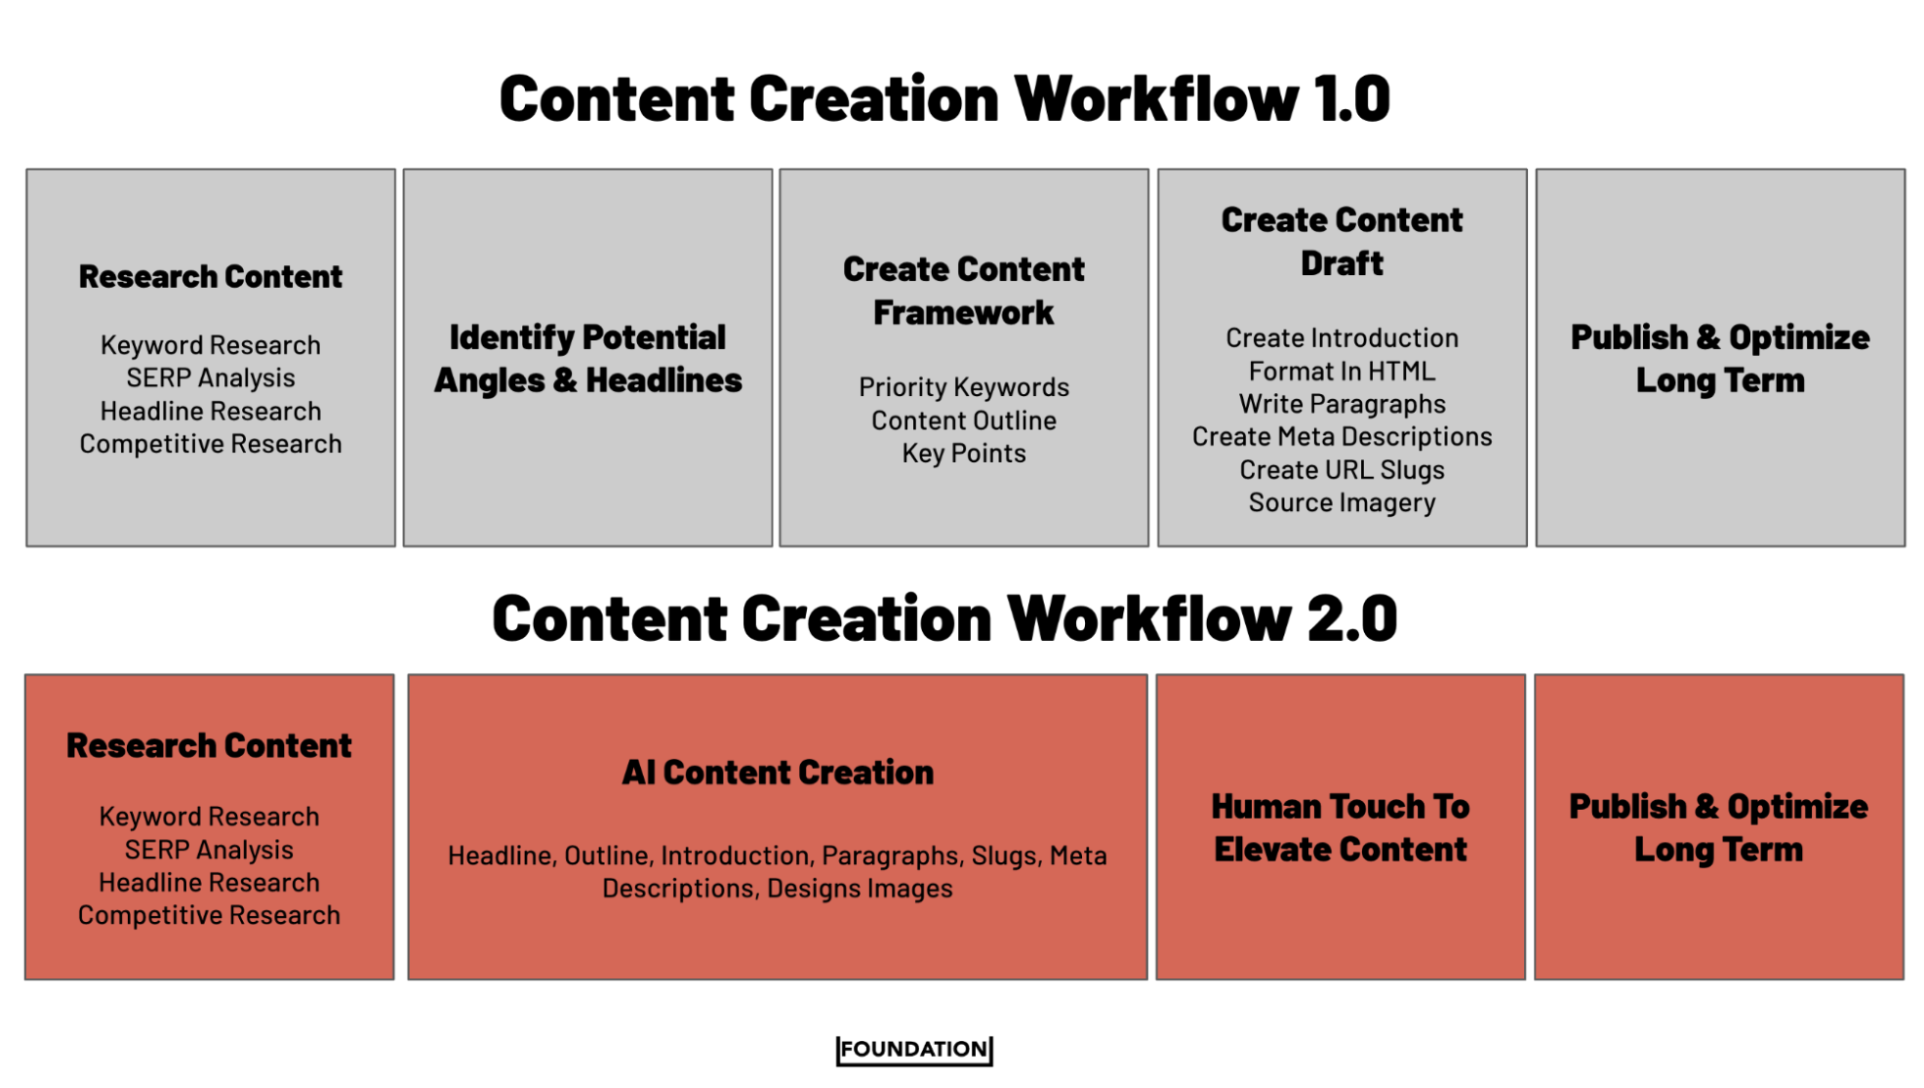 Comparison of content creation work flows